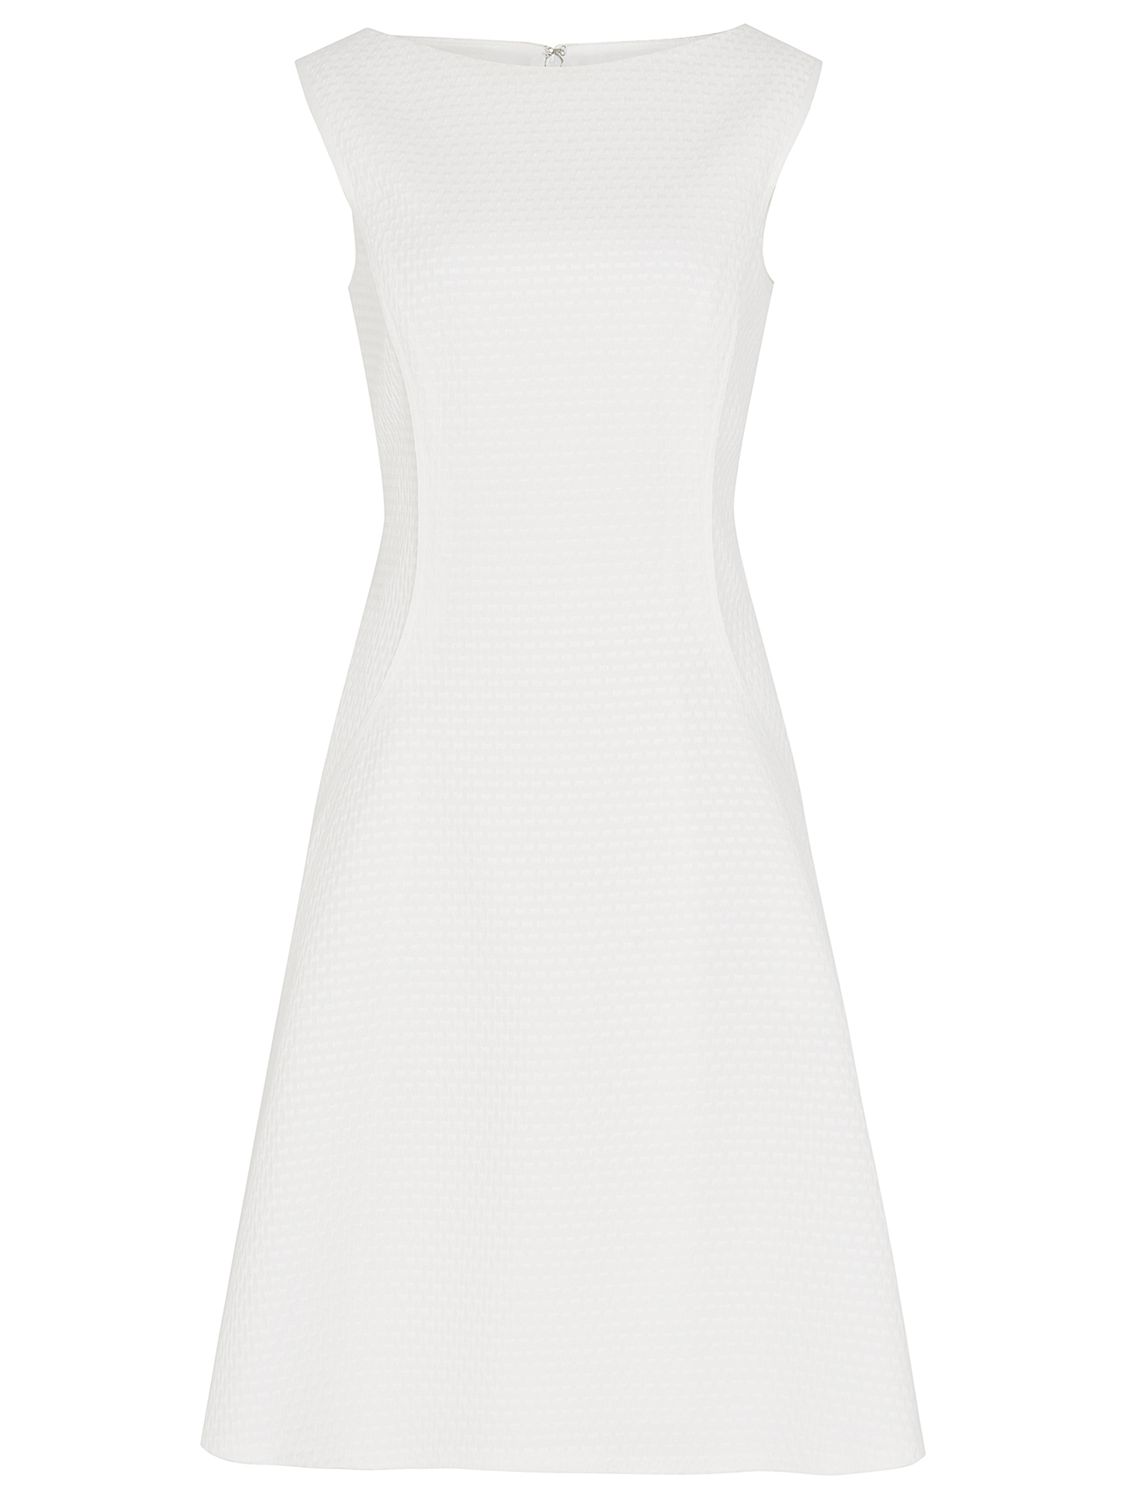 Reiss Cara Textured Dress, Off White